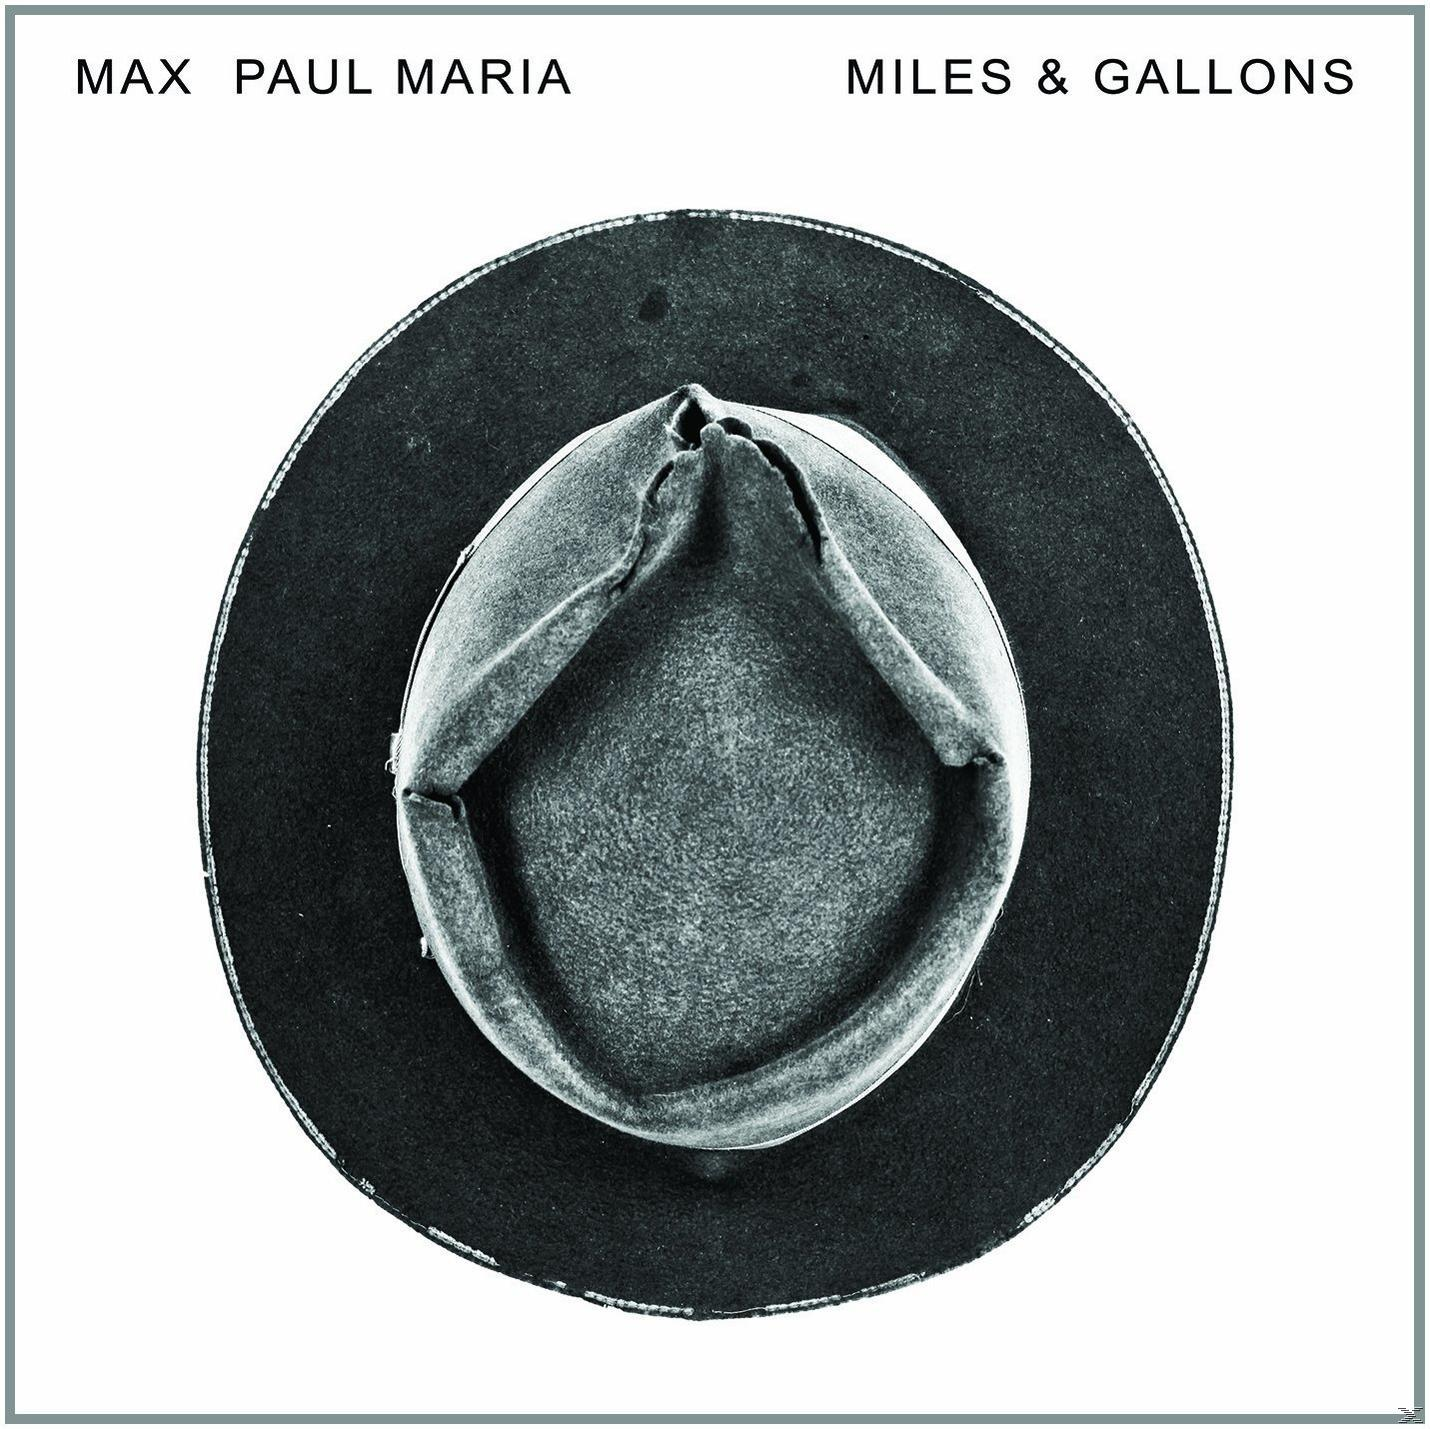 & - Paul Max Maria - Gallons Miles (Vinyl)